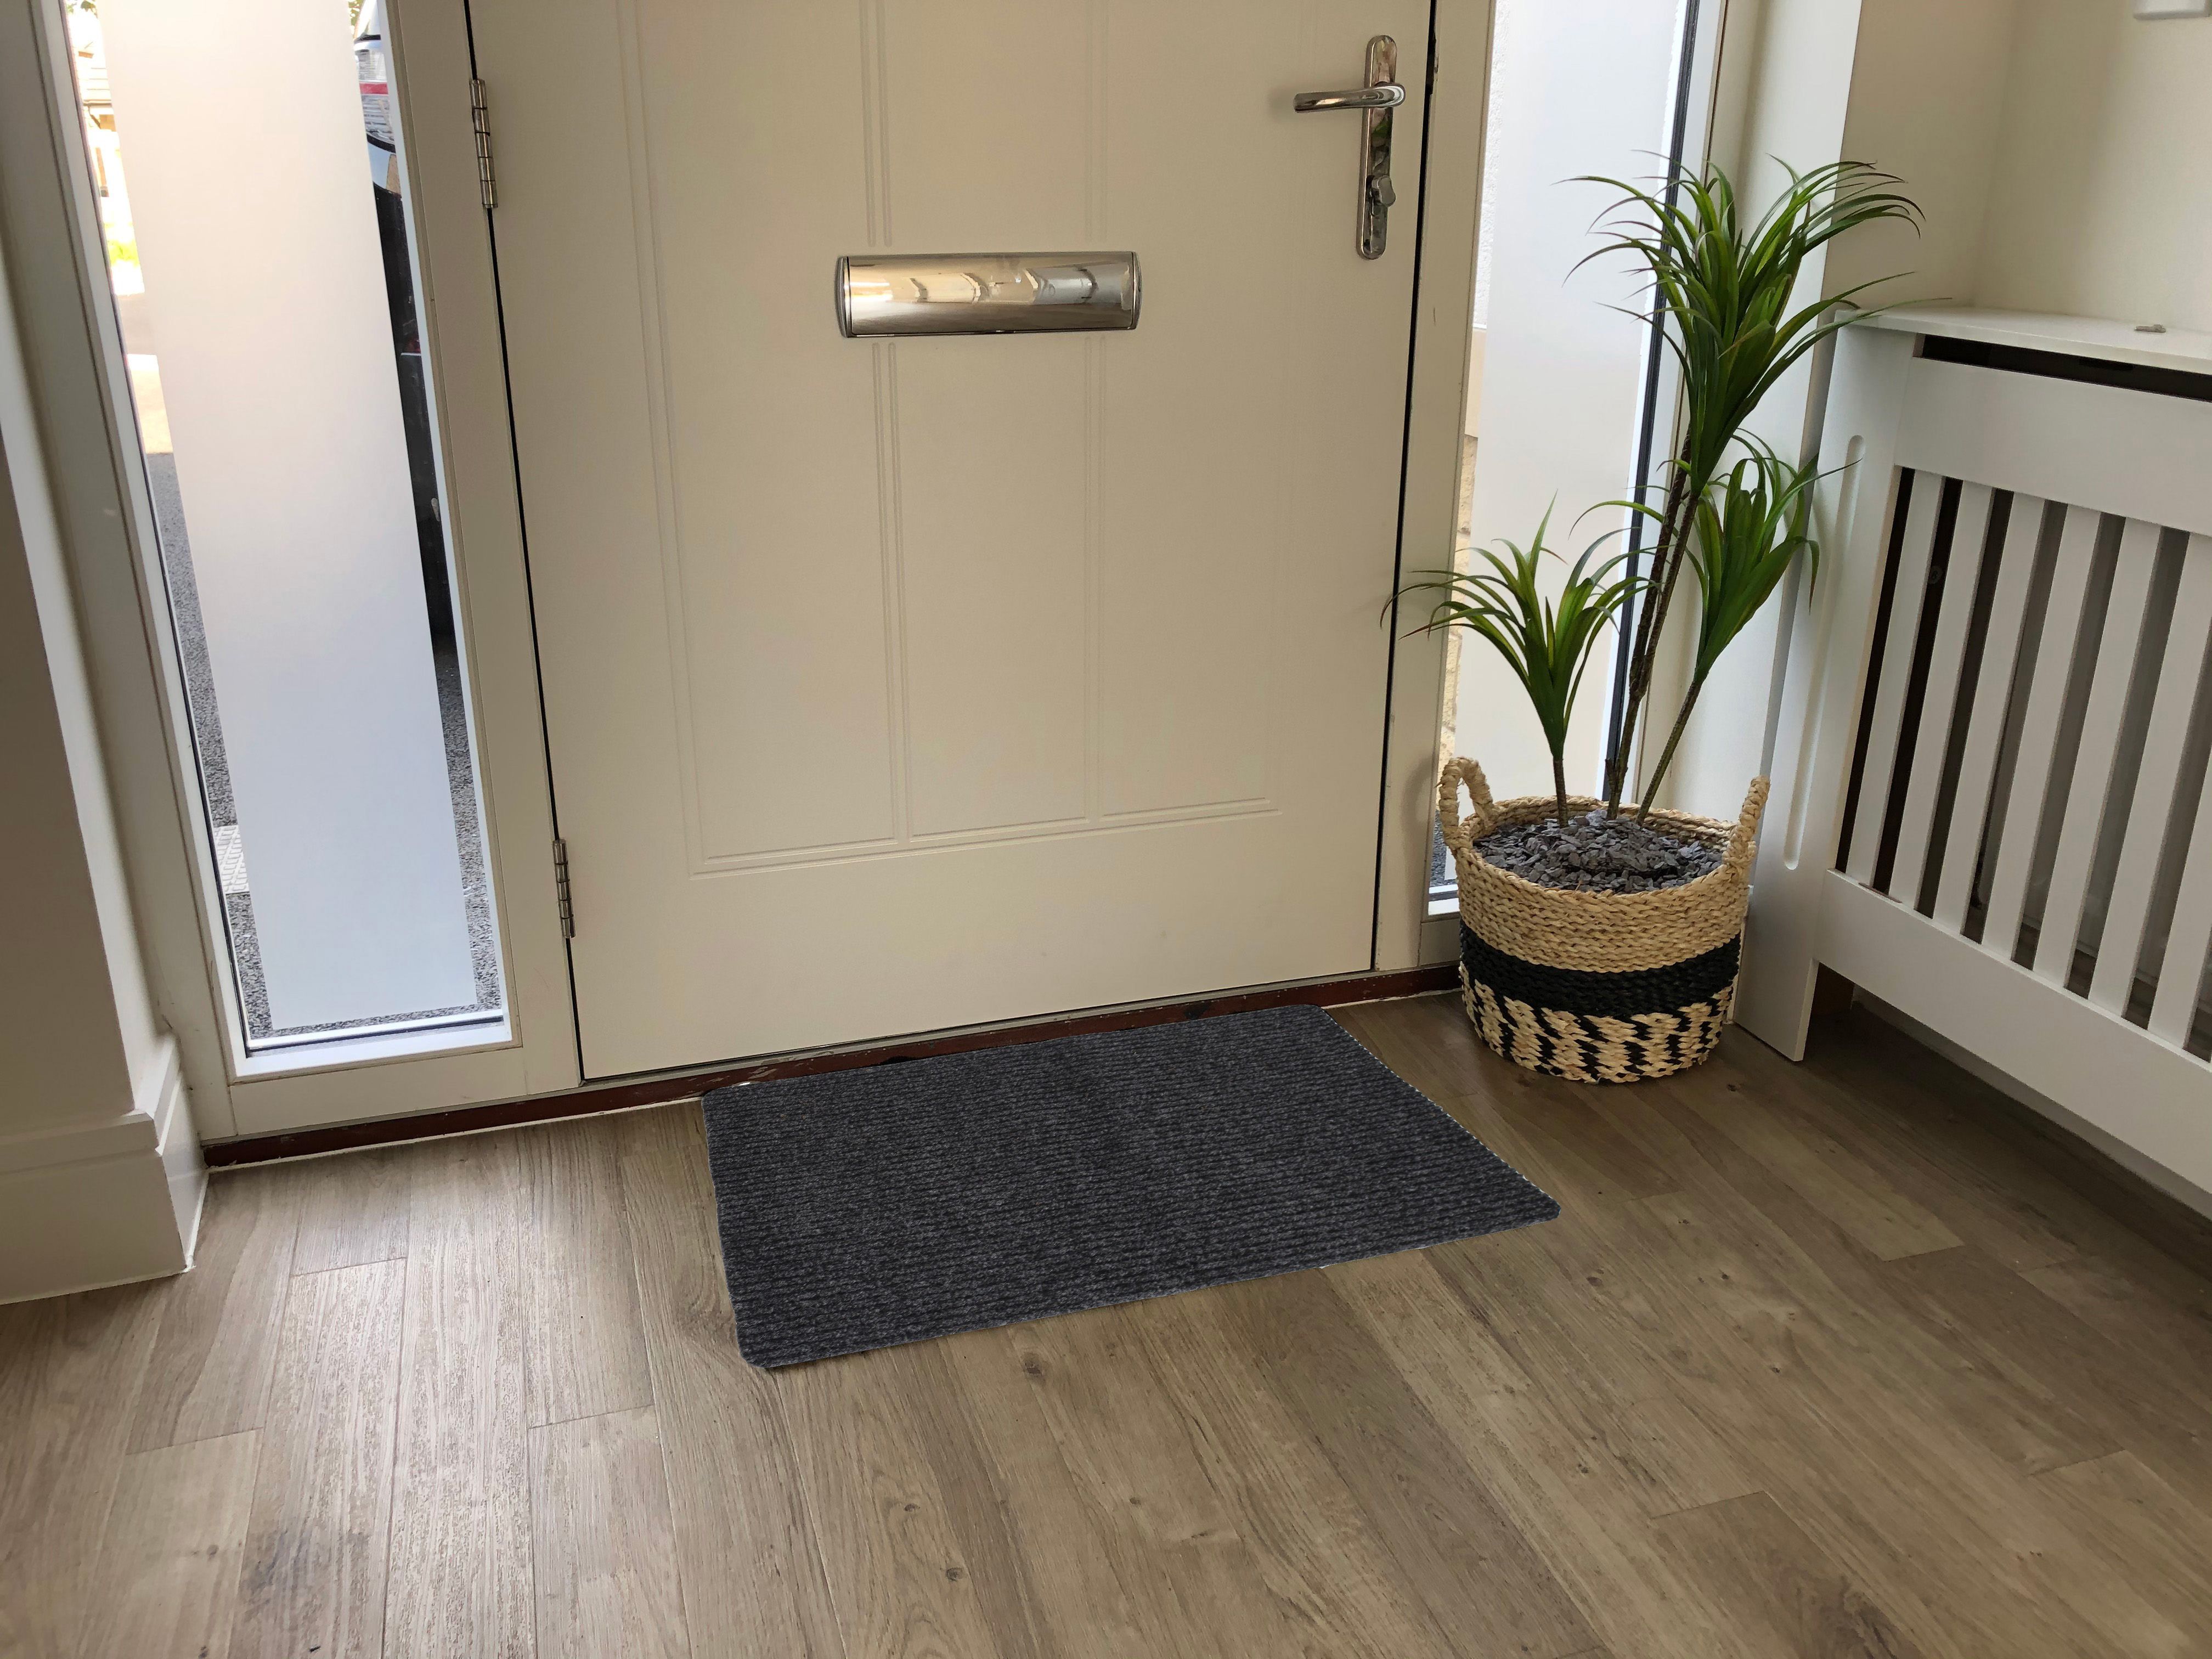 Flooring Grey Plain Door mat, 75cm x 50cm